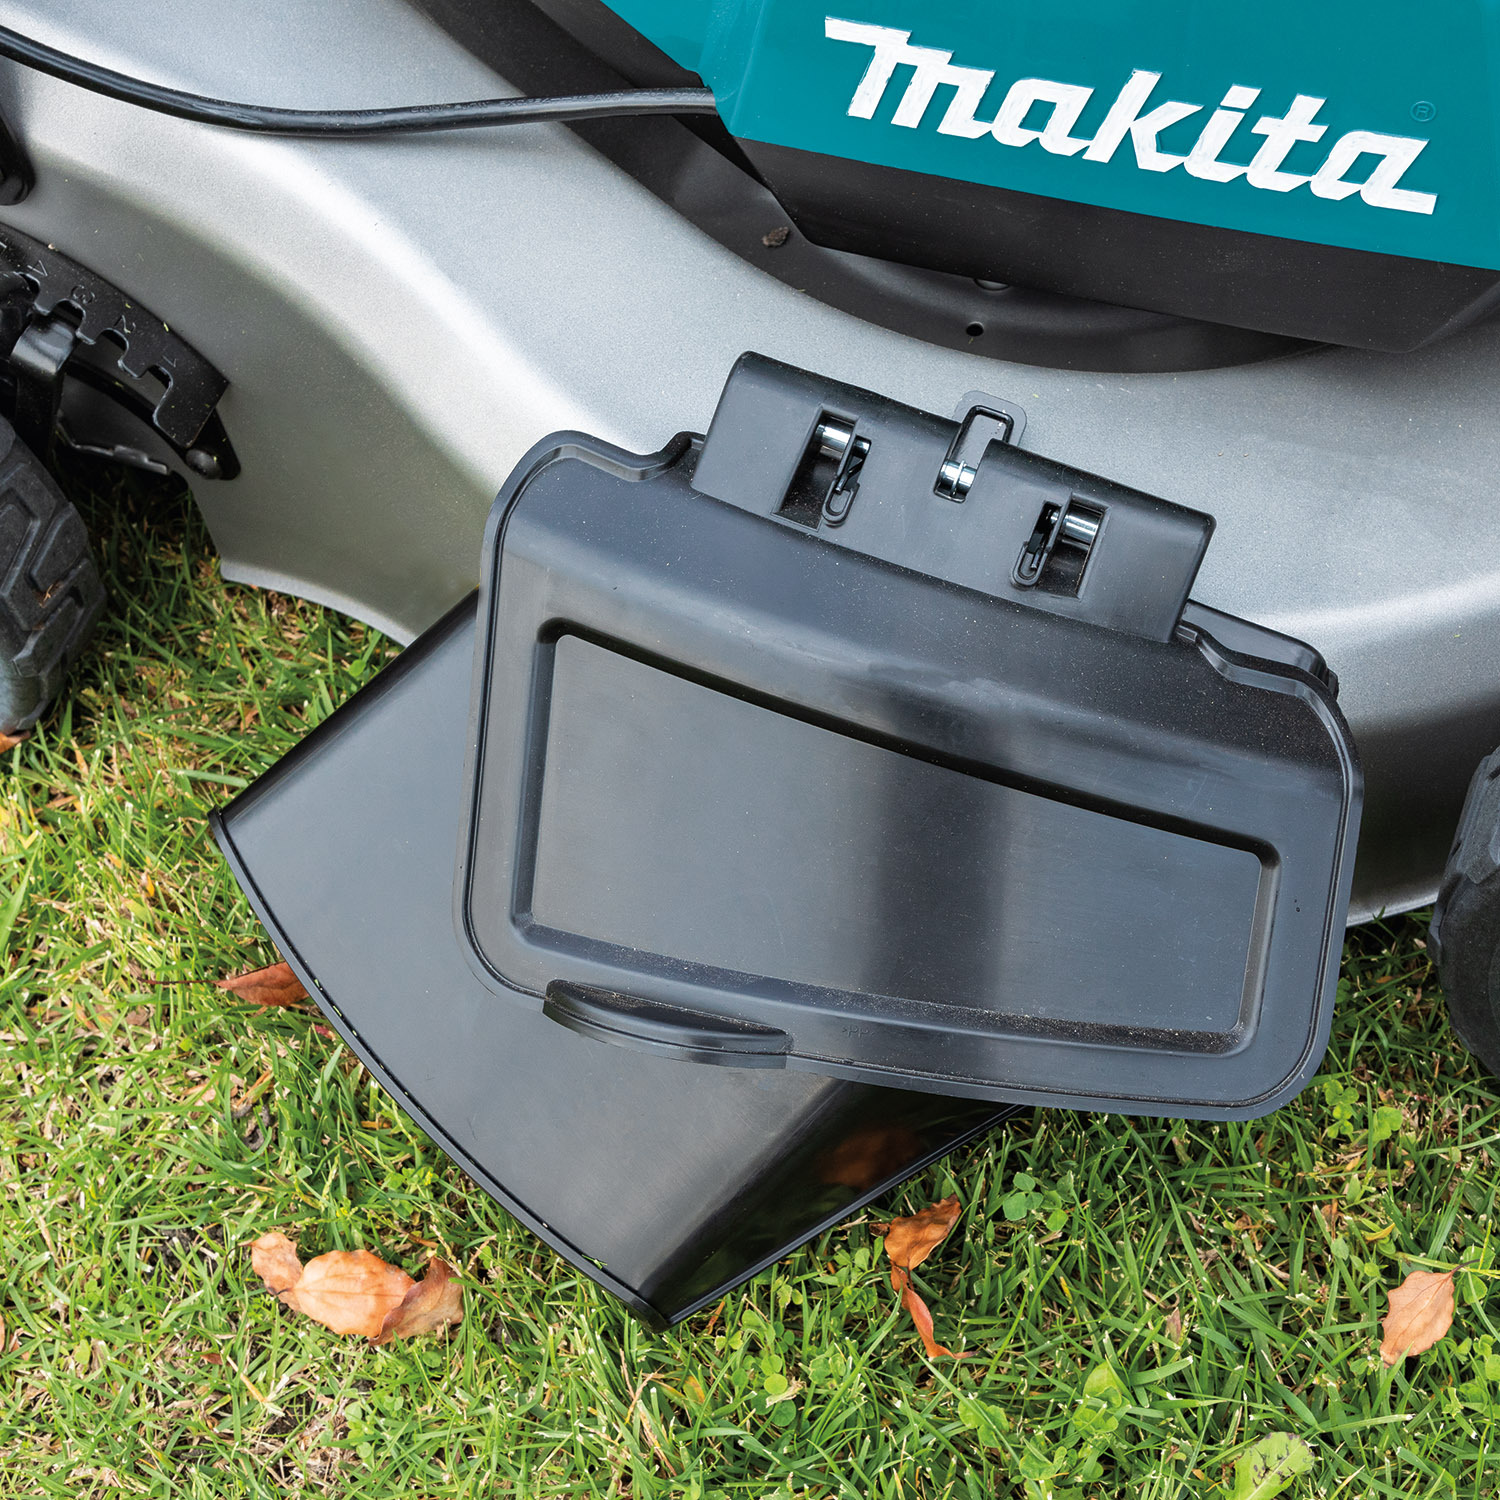 Makita 18Vx2 Brushless 534mm Self-Propelled Lawn Mower 5.0ah DLM536PT4X